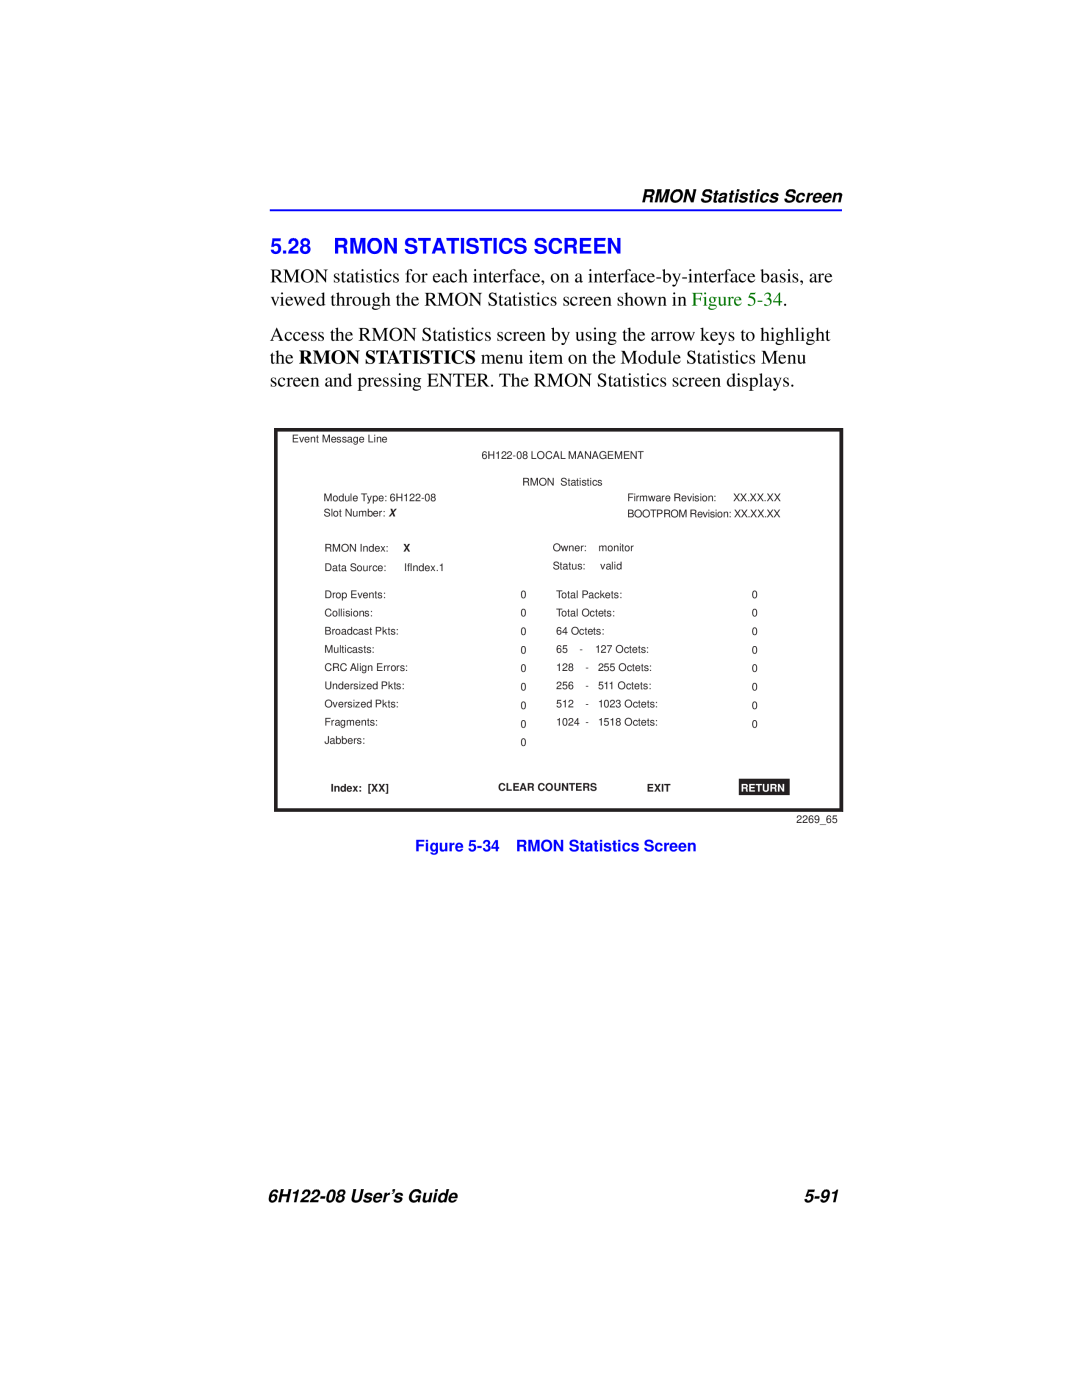 Cabletron Systems 6H122-08 manual Rmon Statistics Screen, 34 RMON Statistics Screen 